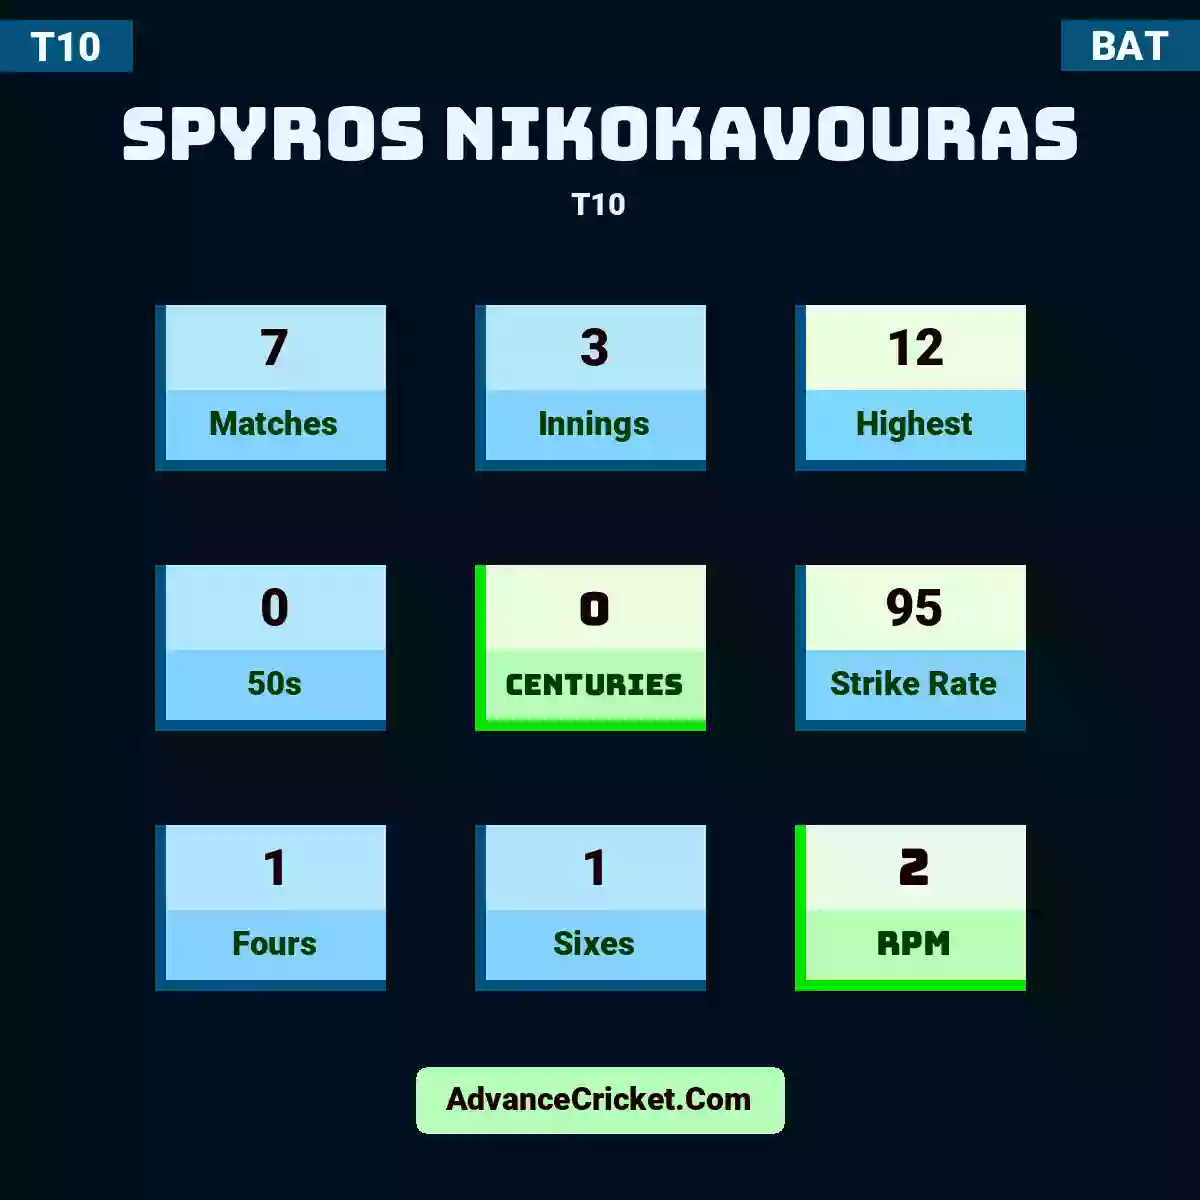 Spyros Nikokavouras T10 , Spyros Nikokavouras played 7 matches, scored 12 runs as highest, 0 half-centuries, and 0 centuries, with a strike rate of 95. S.Nikokavouras hit 1 fours and 1 sixes, with an RPM of 2.